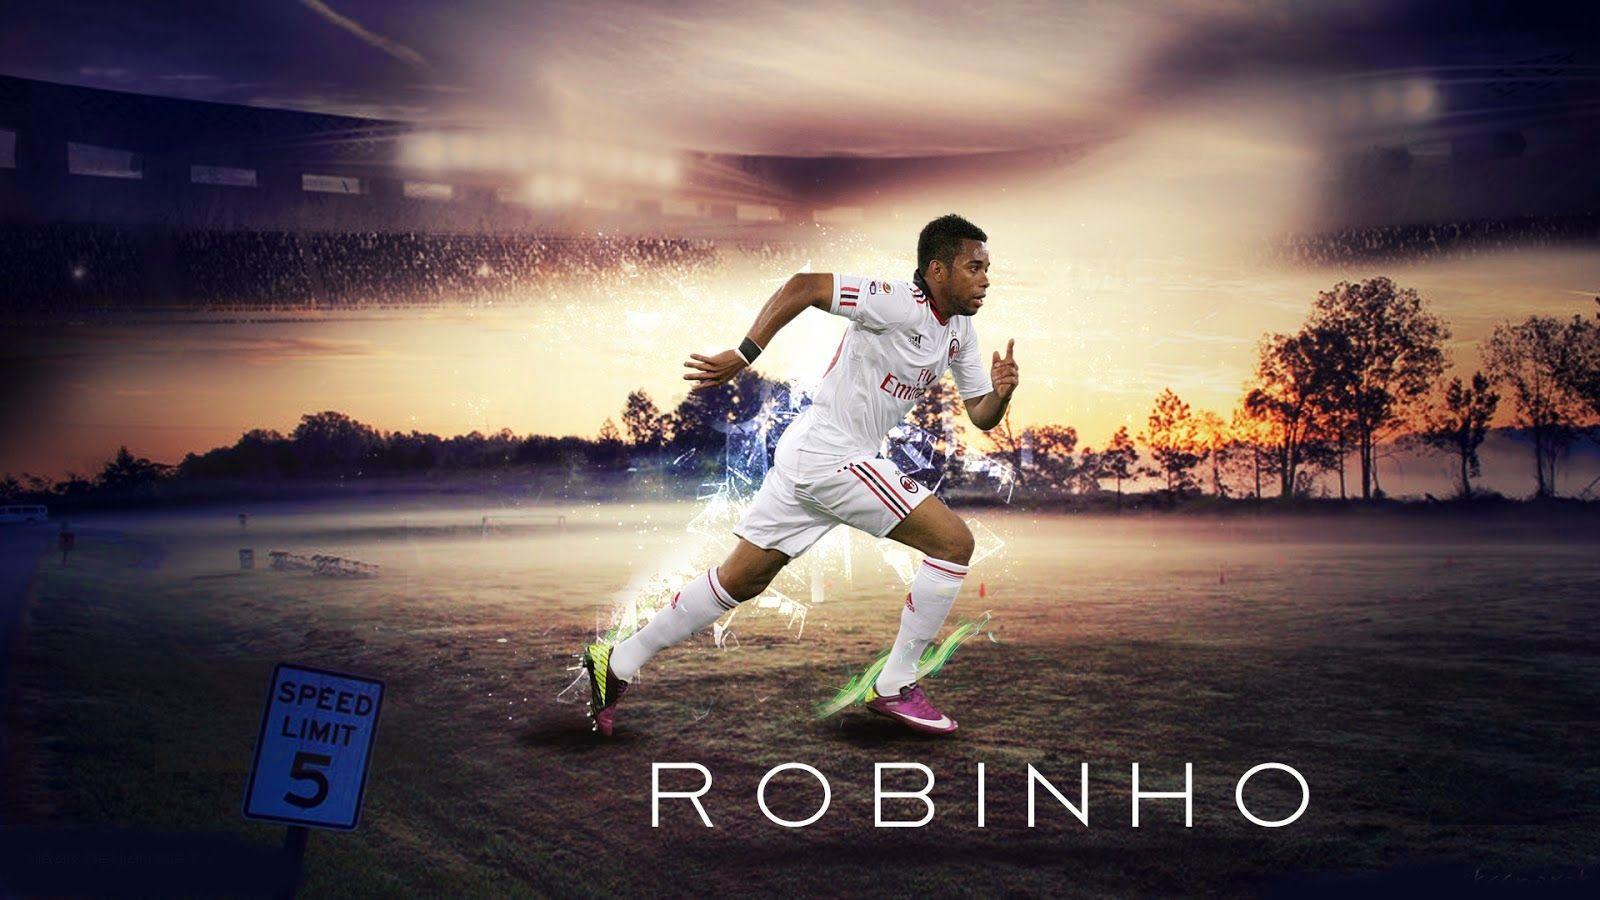 Robinho Scores First Goal Copa Do Brasil 2014 FunBie Entertainment